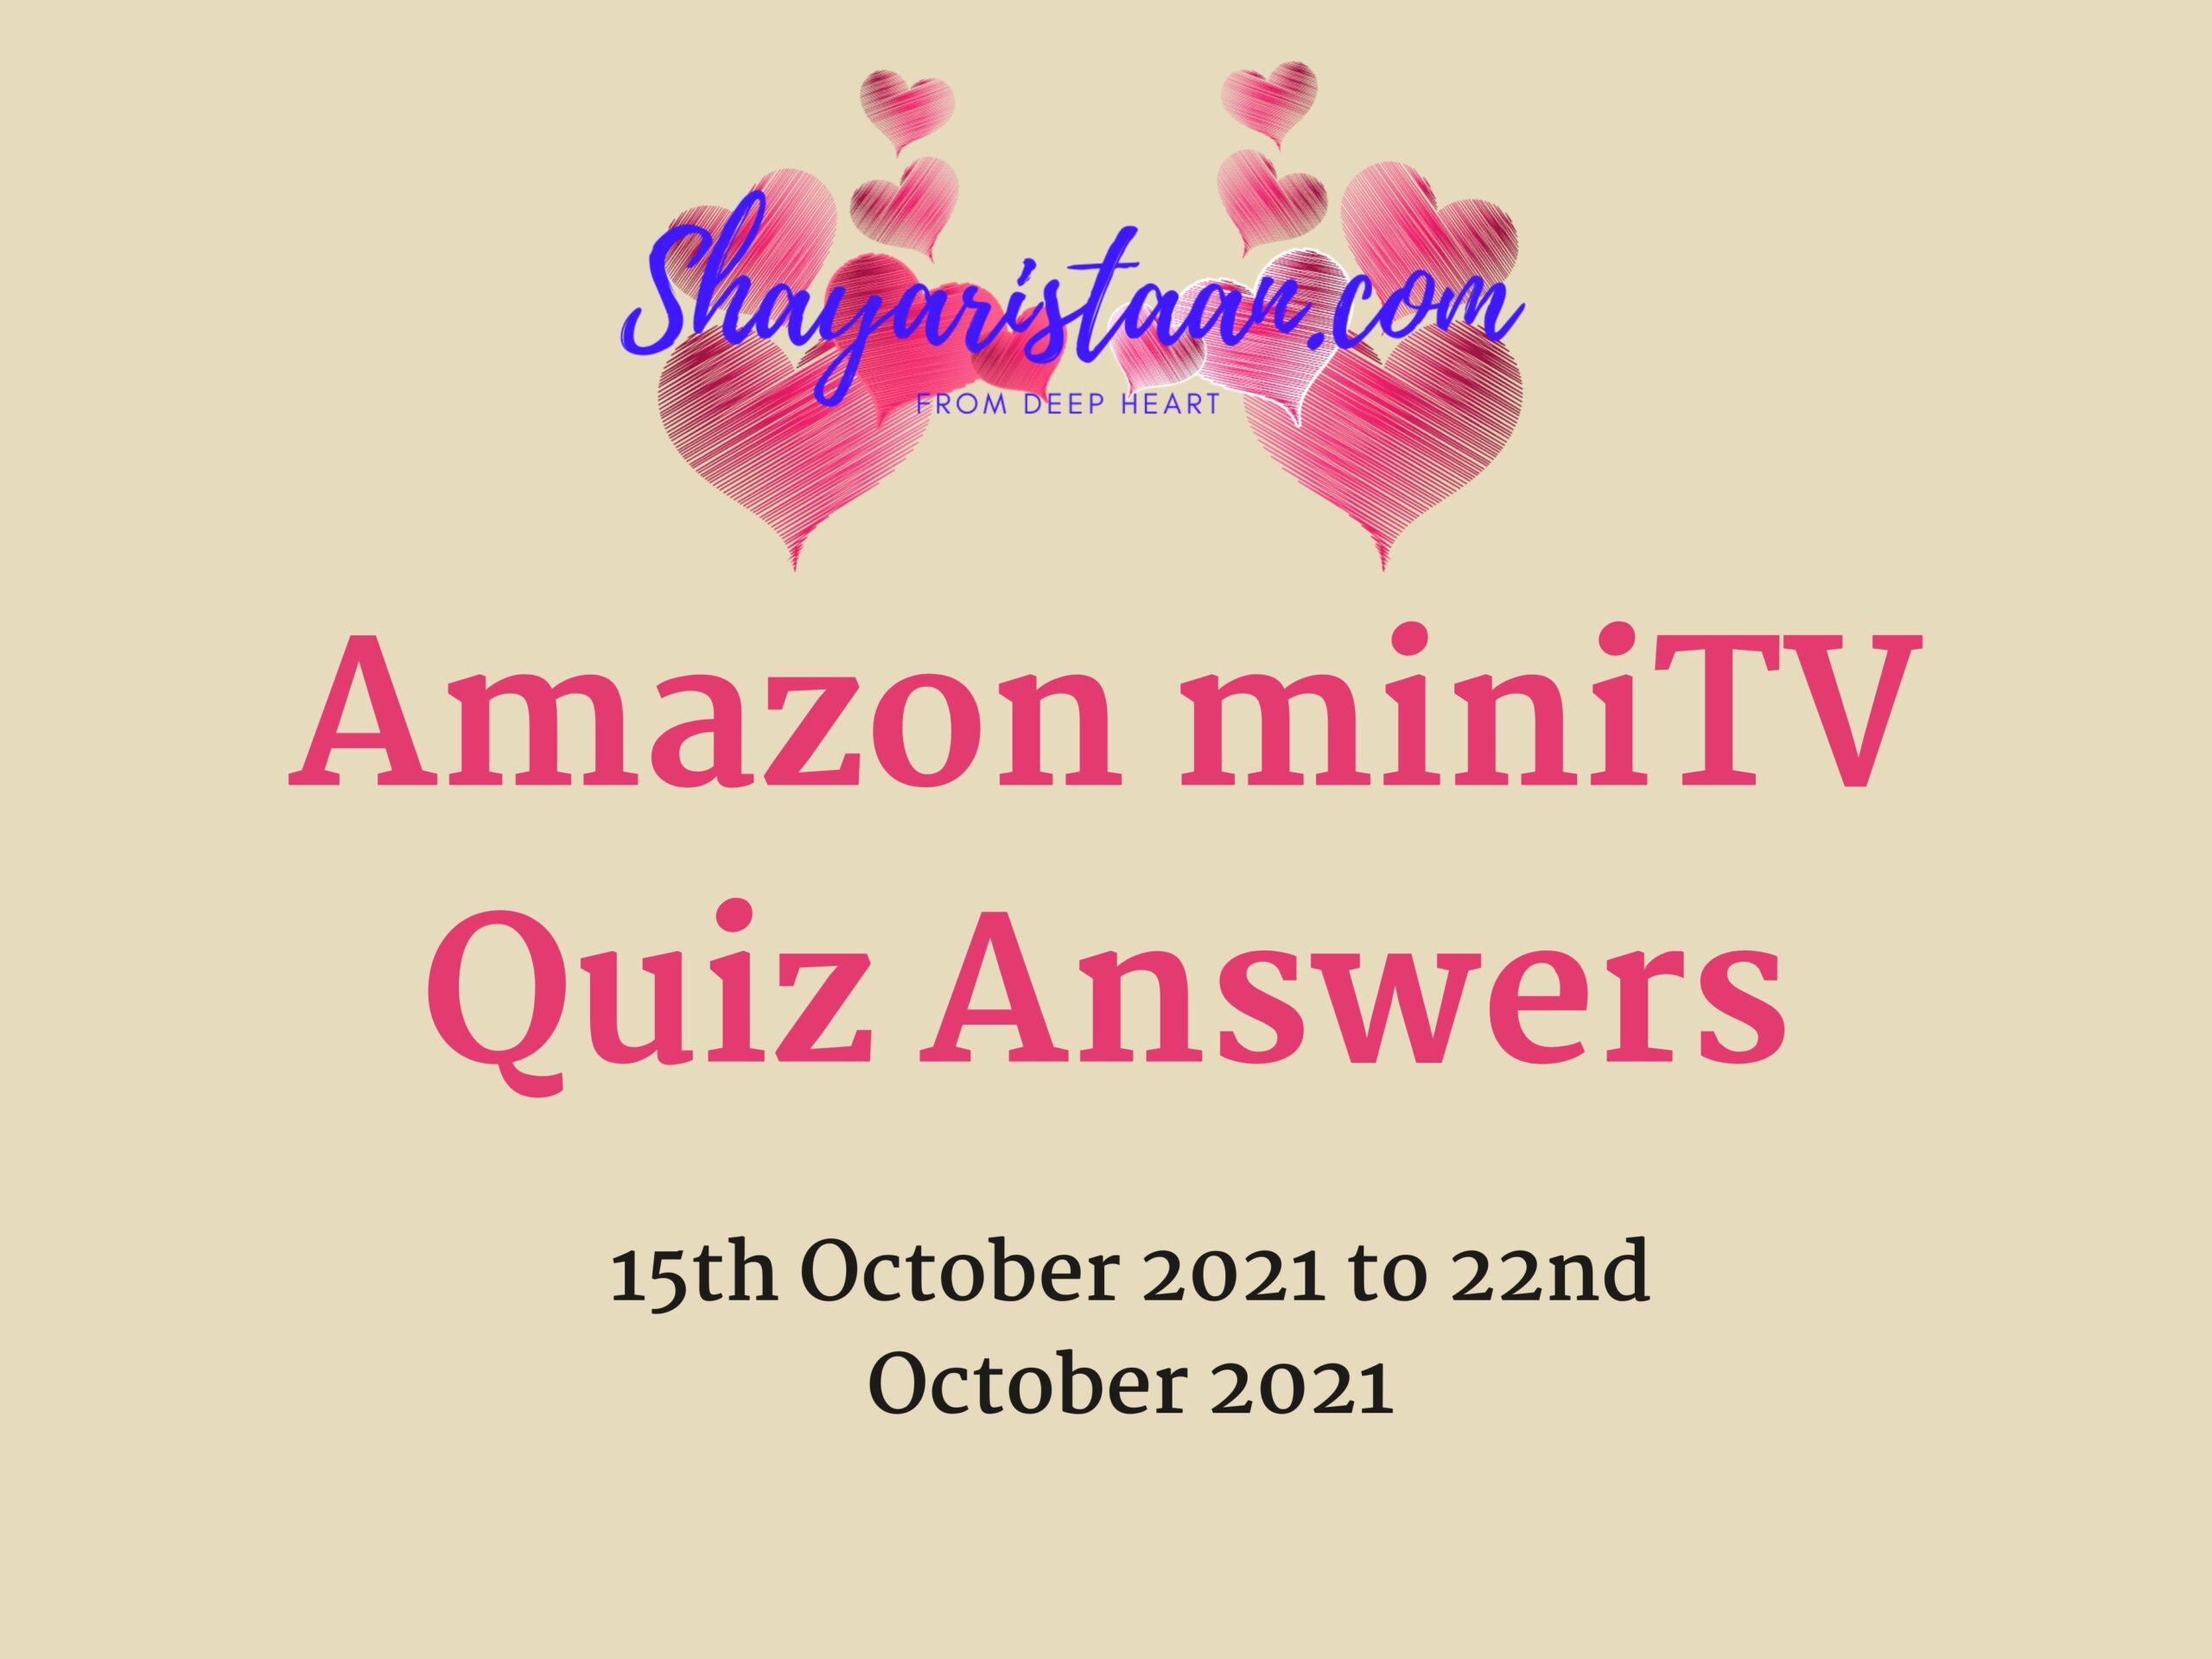 Amazon miniTV Quiz Answers